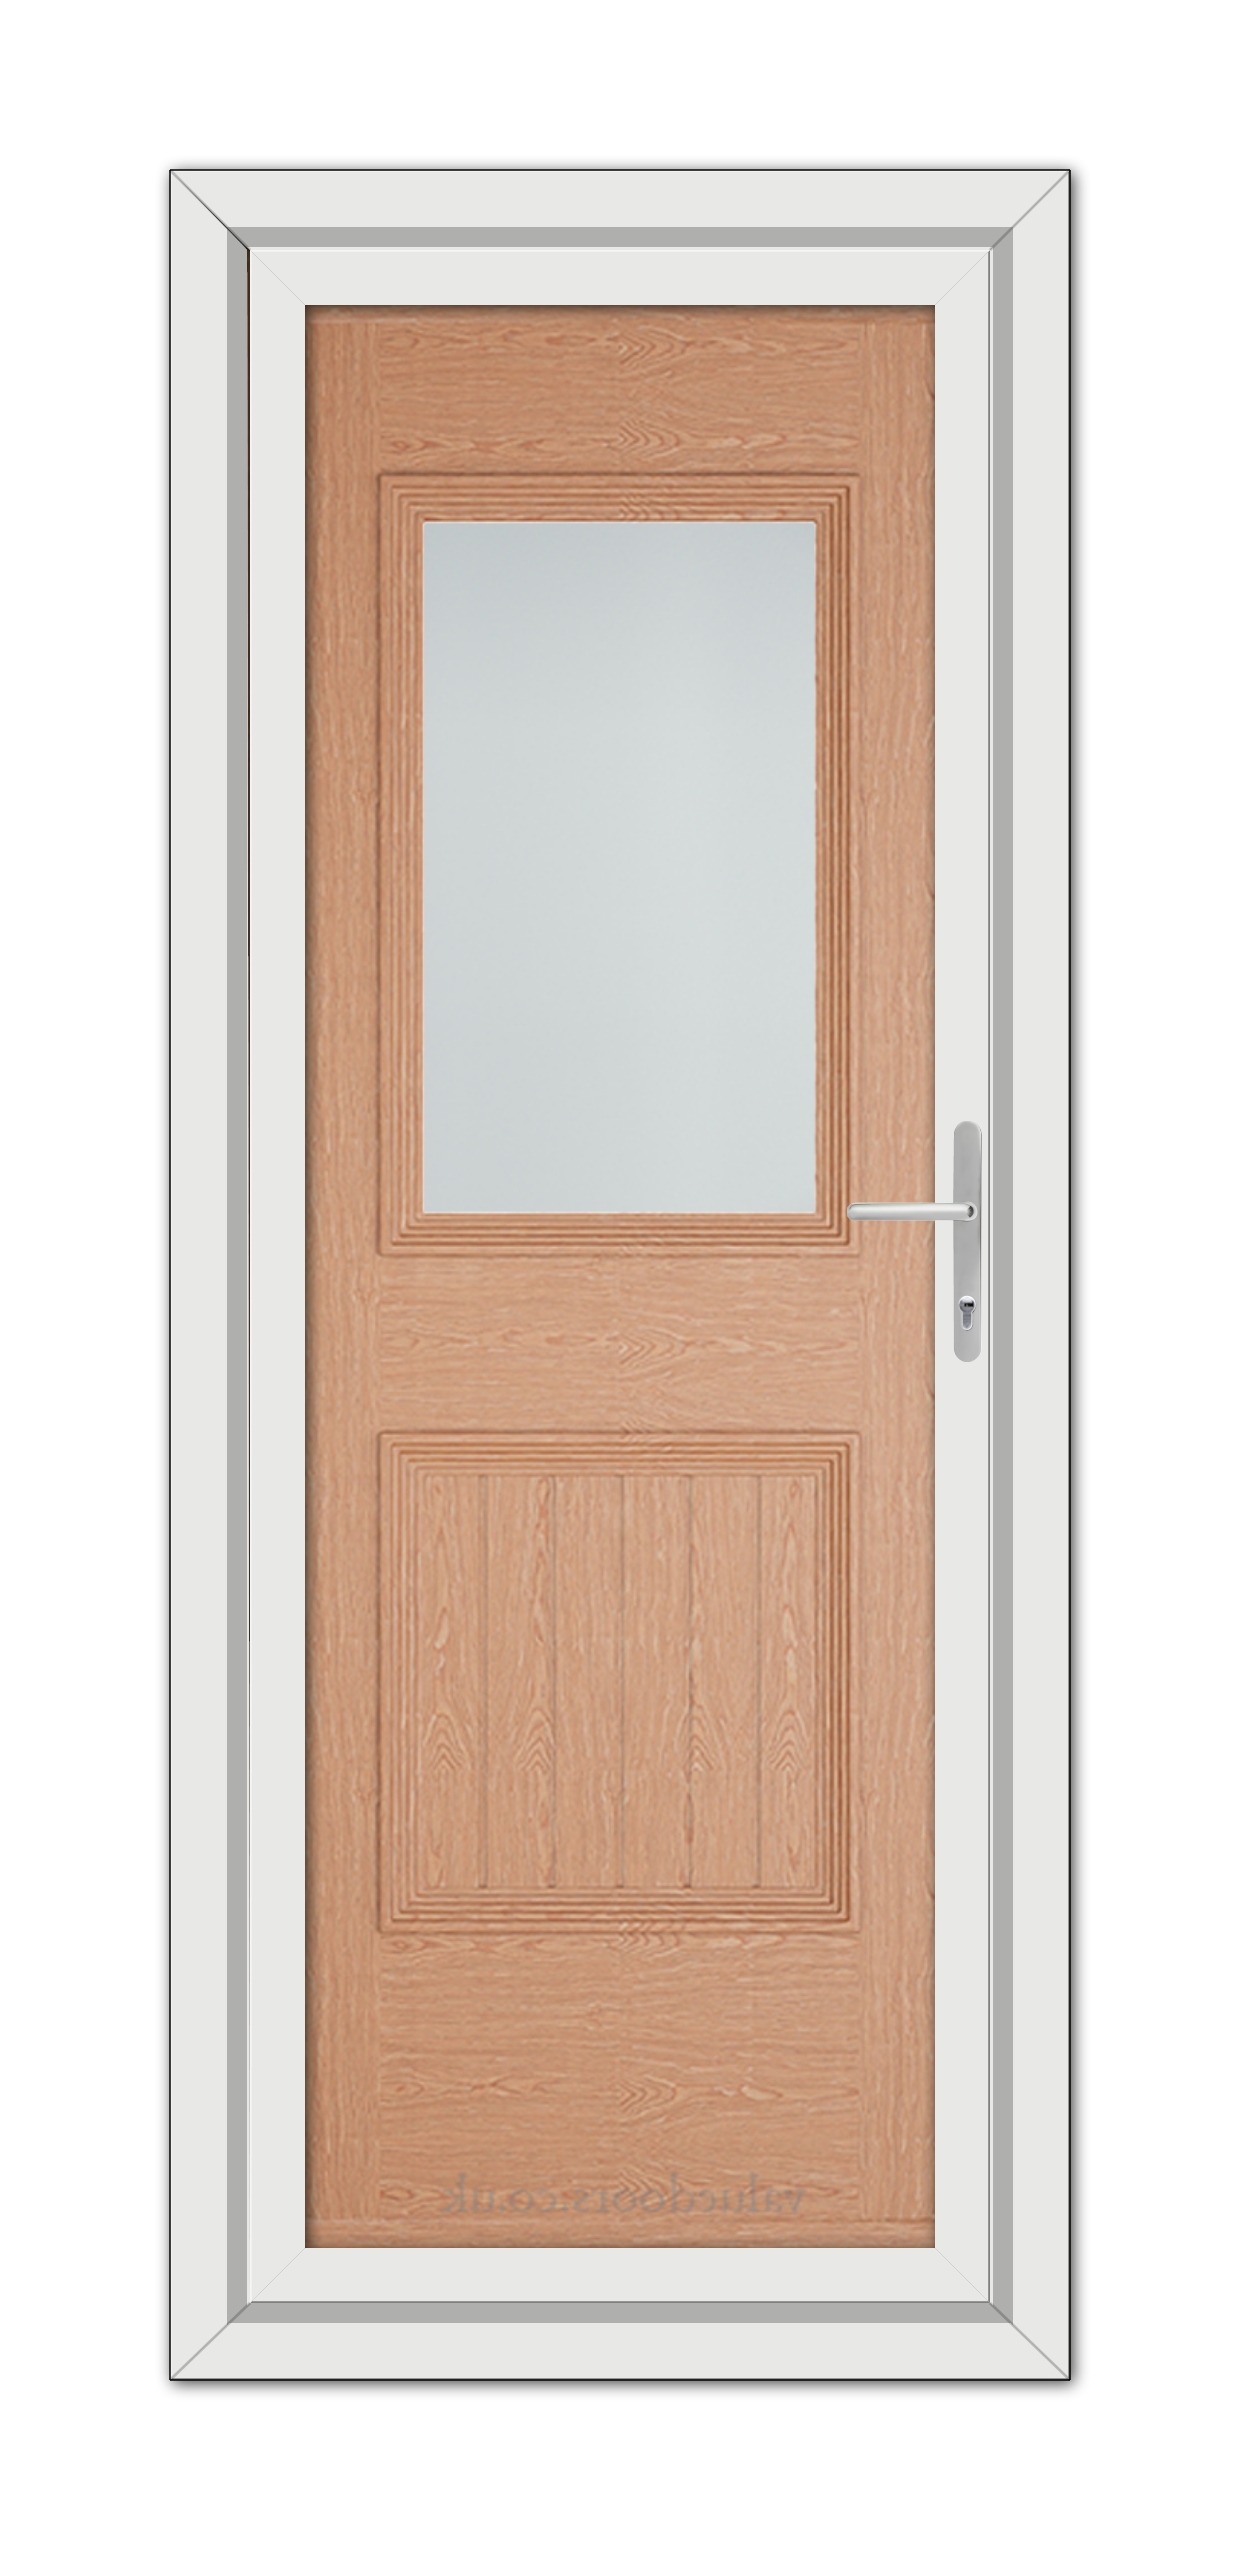 A close-up of an Irish Oak Alnwick One uPVC Door.